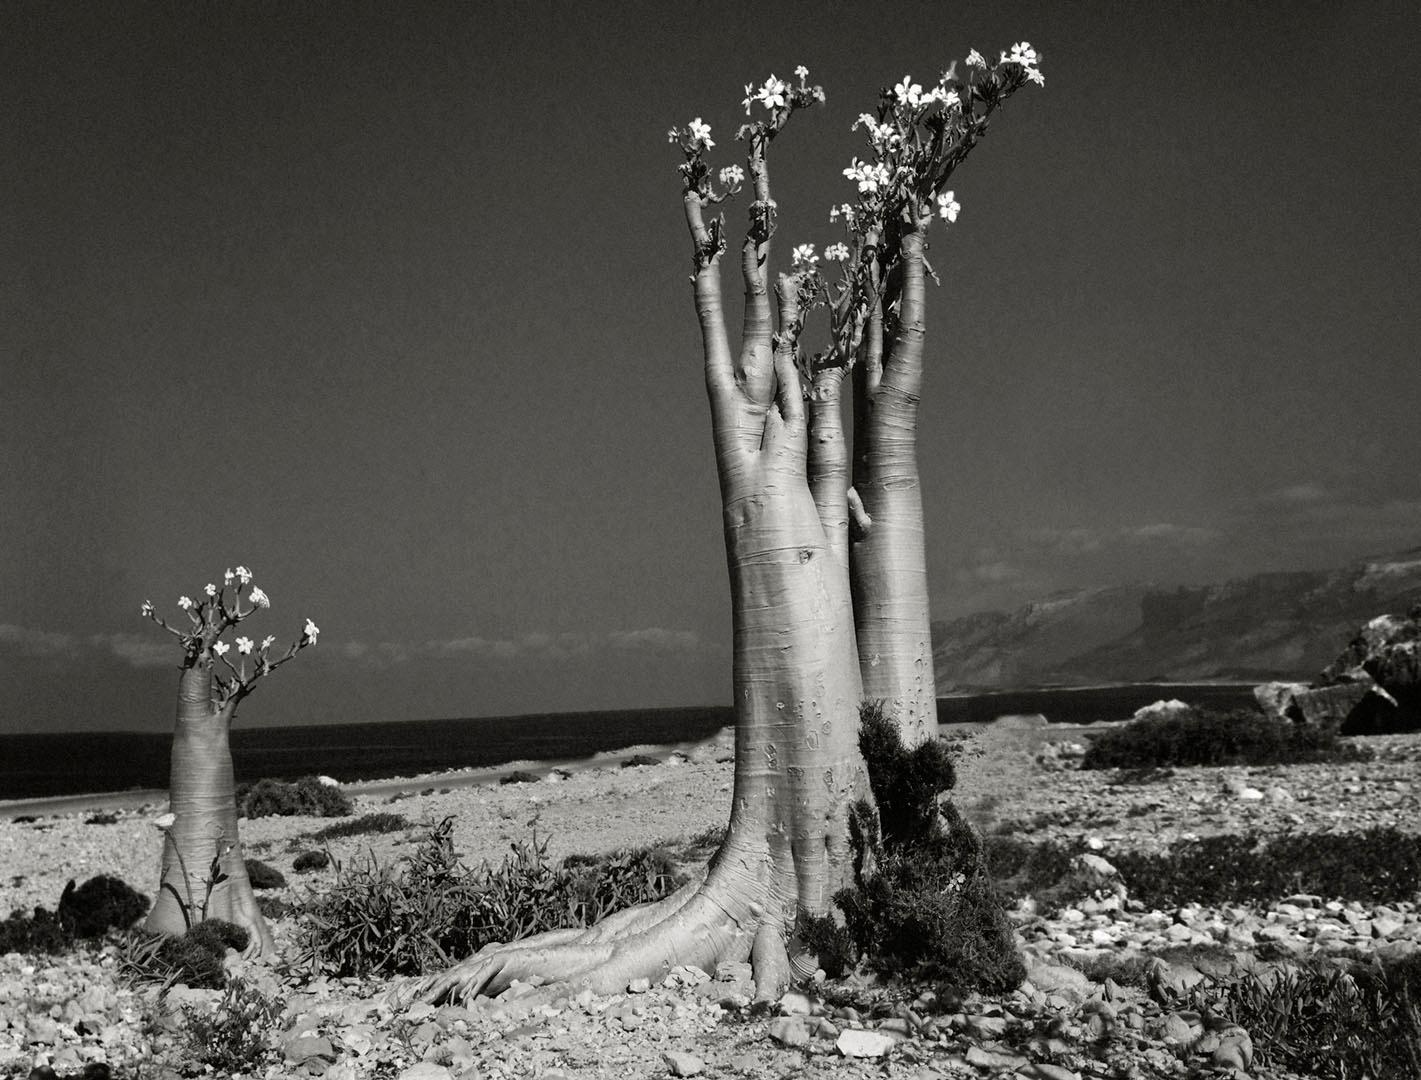 Beth Moon Black and White Photograph - Desert Rose (Erher Beach)